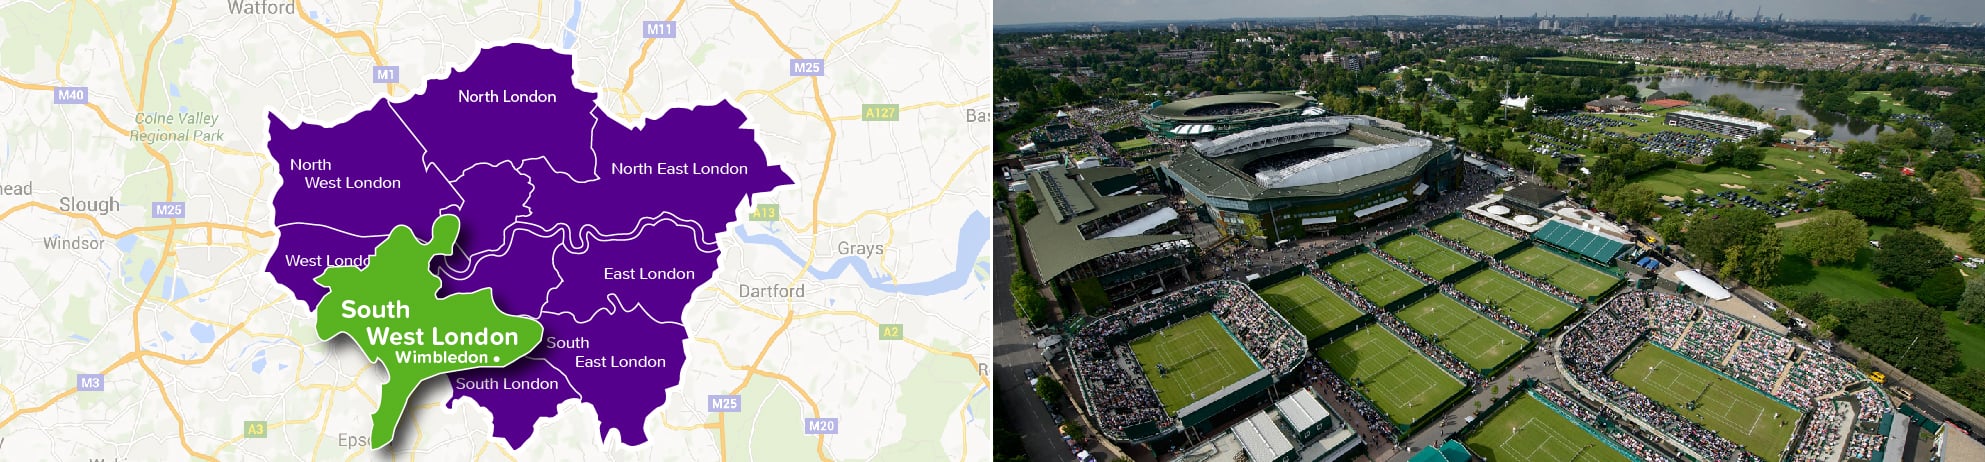 Map of Wimdledon, and Wimbledon tennis courts